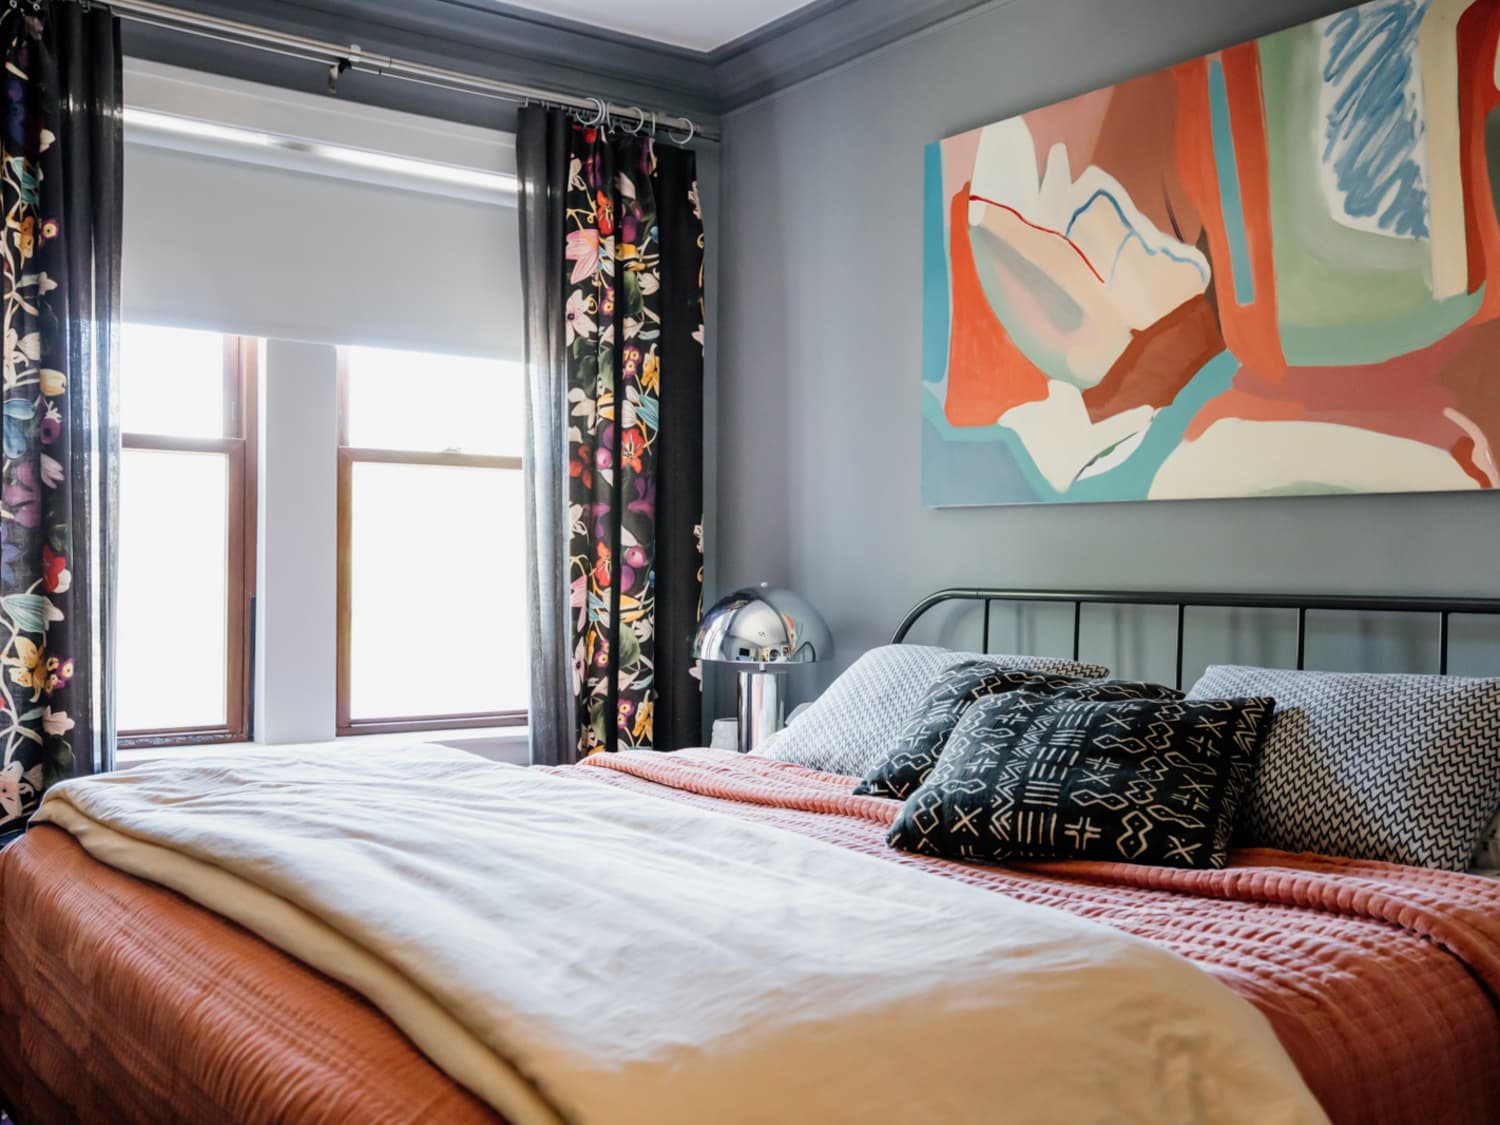 9 Studio Apartment Decorating Ideas on a Budget – BlissLights